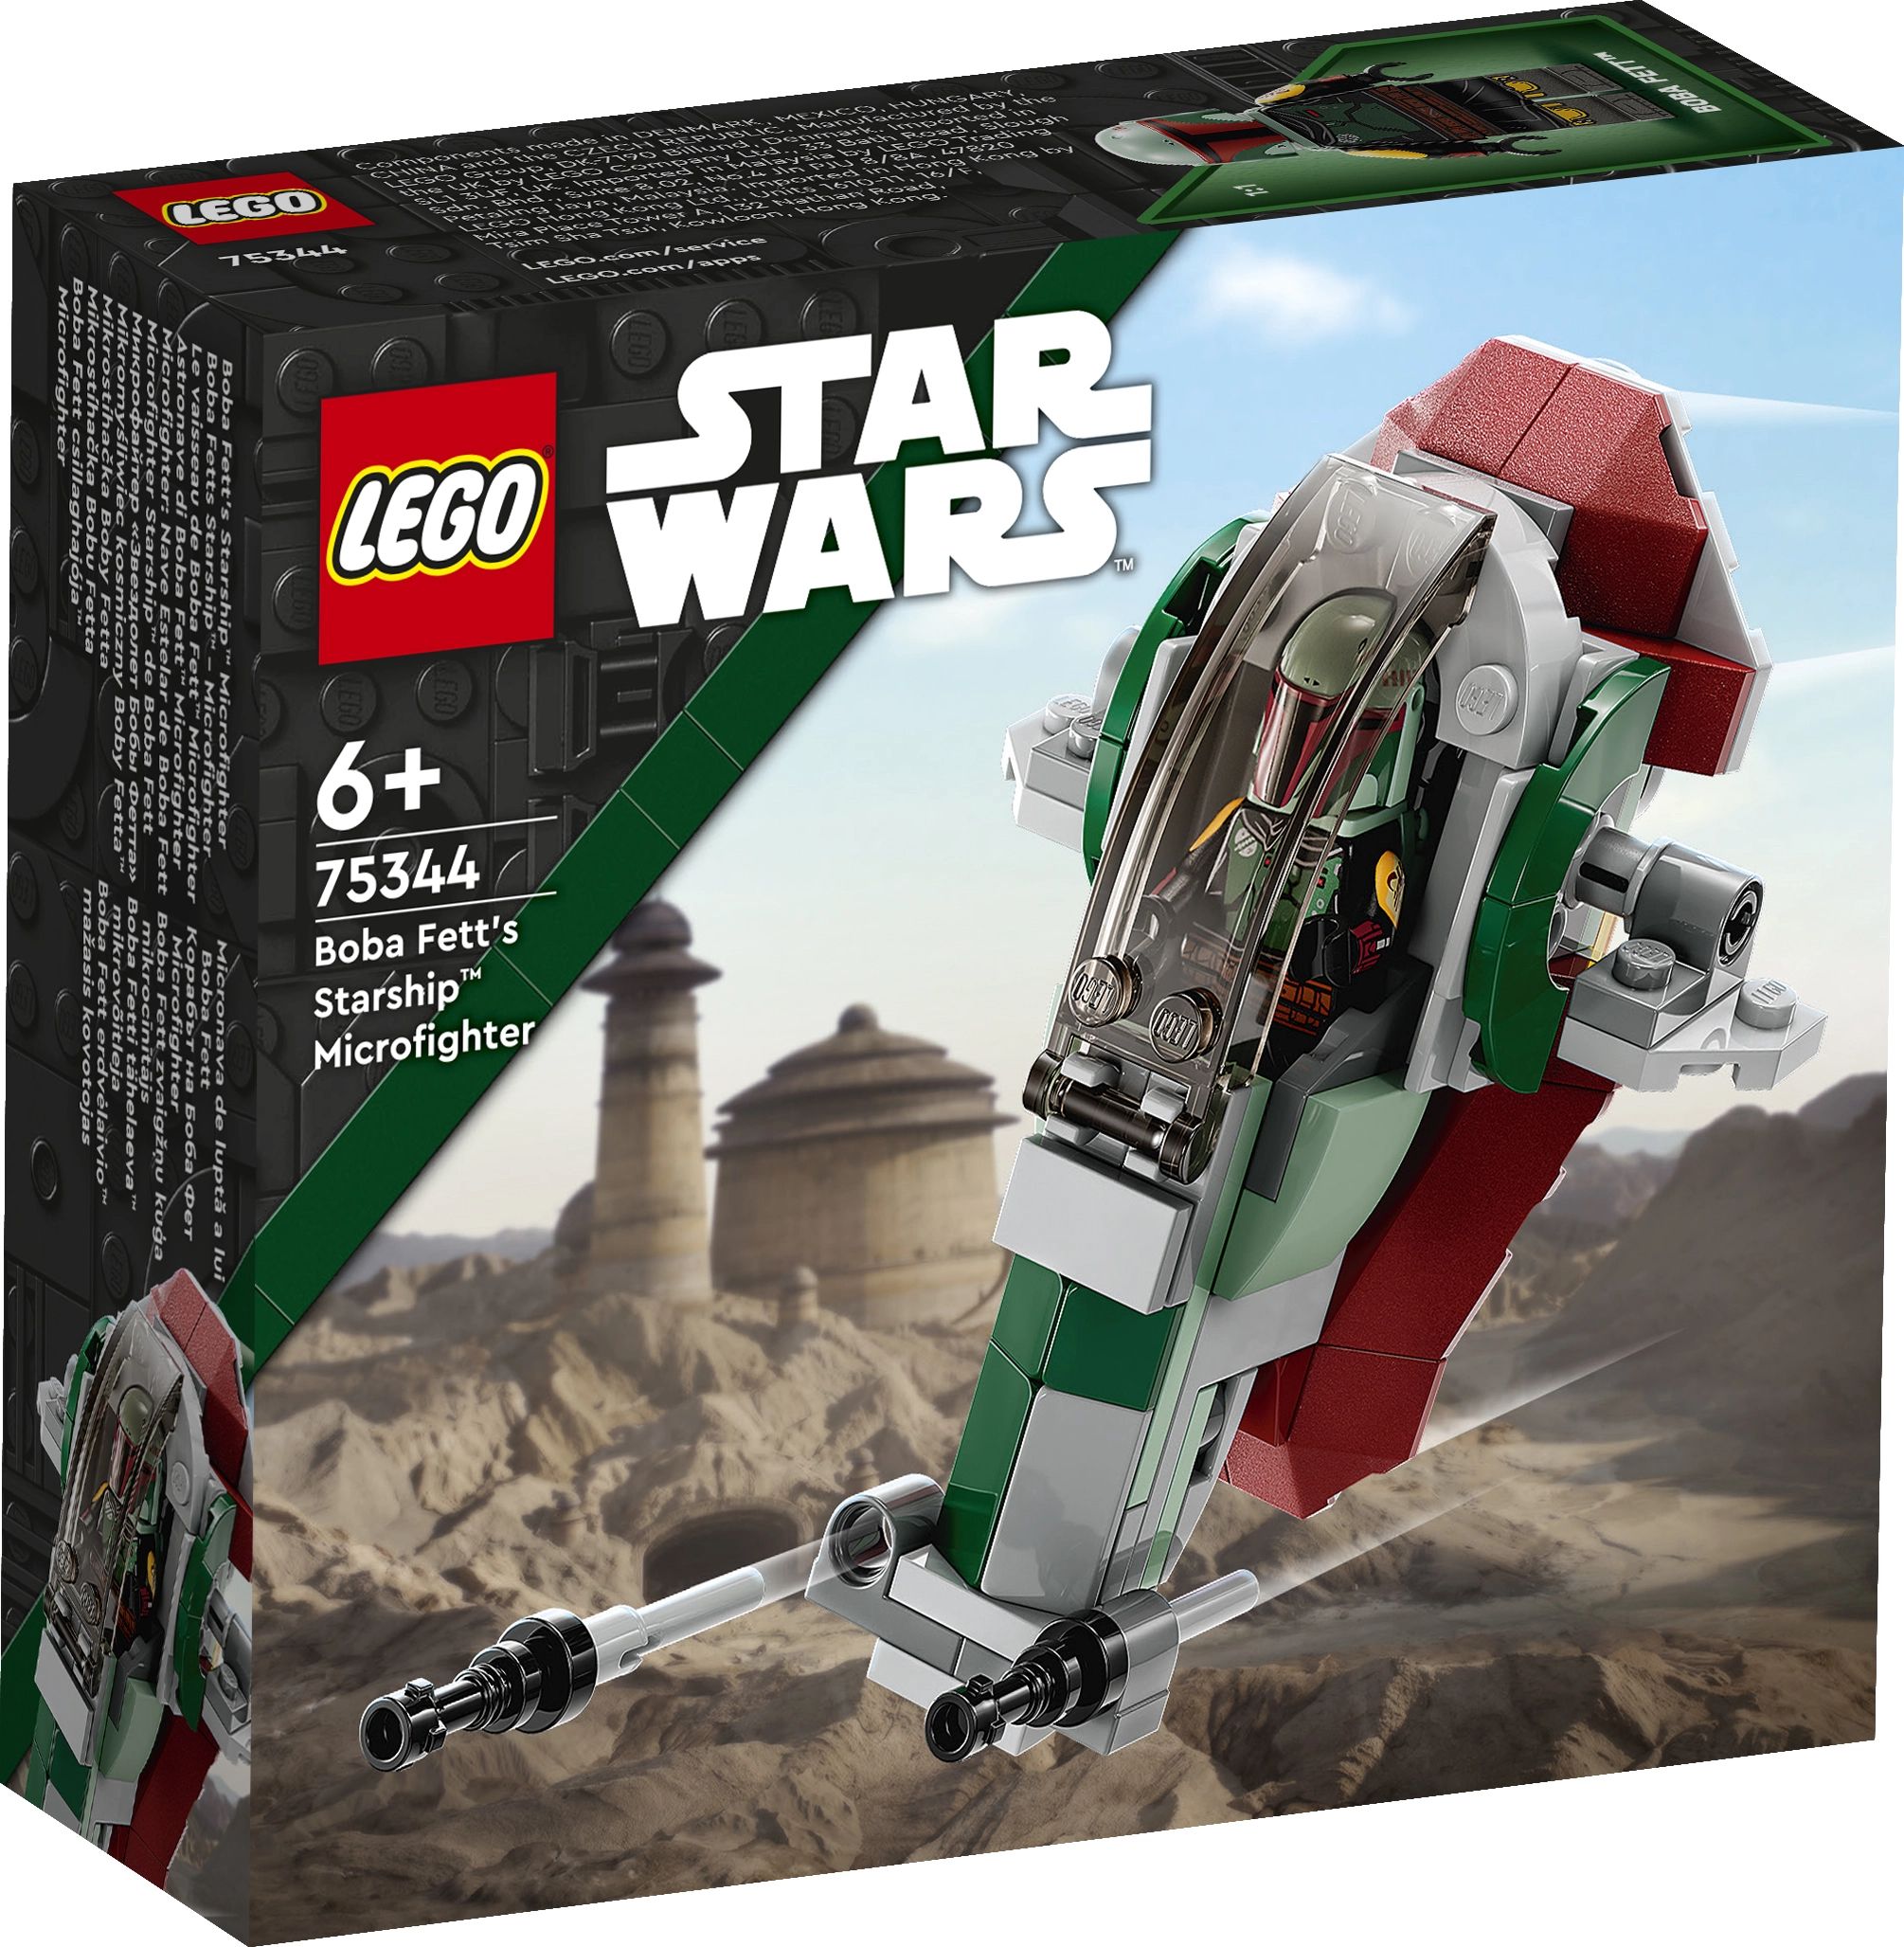 Plik:Lego star wars 75344.jpg